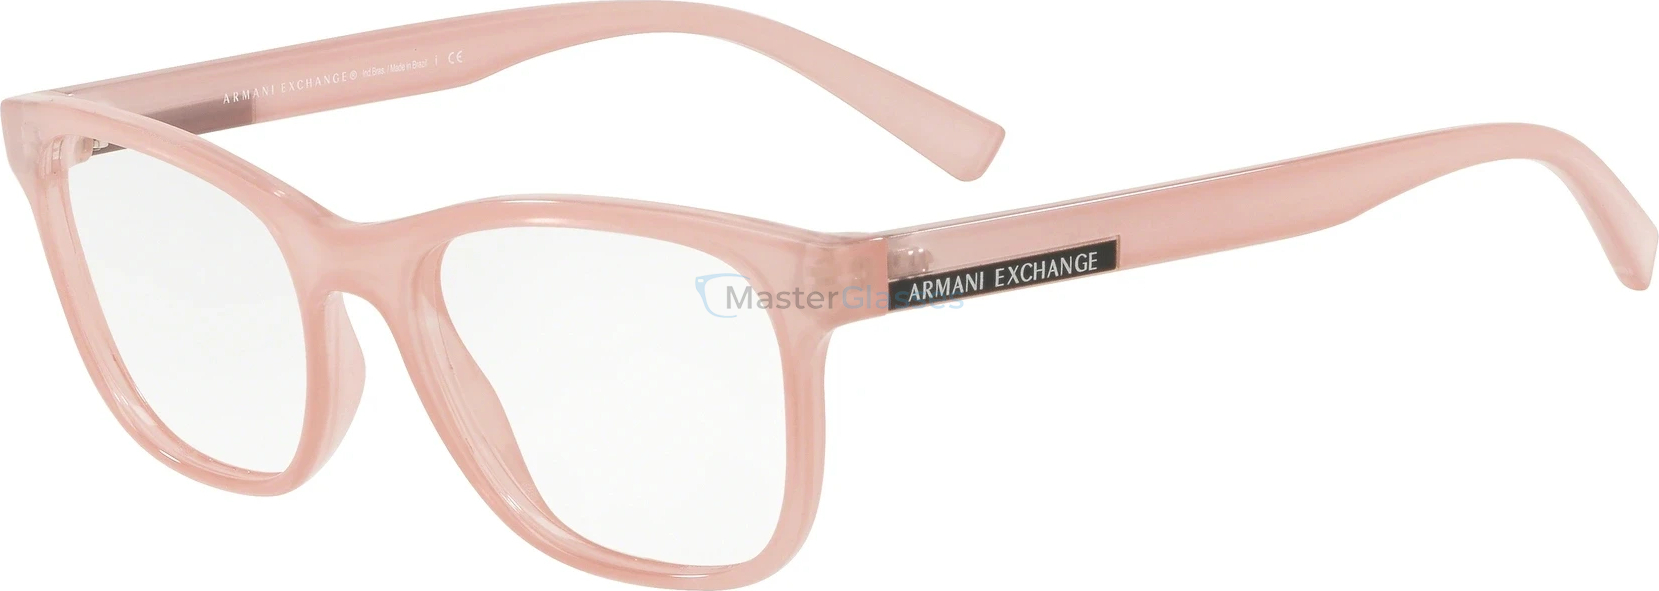  Armani exchange AX3057 8275 Pink Milky